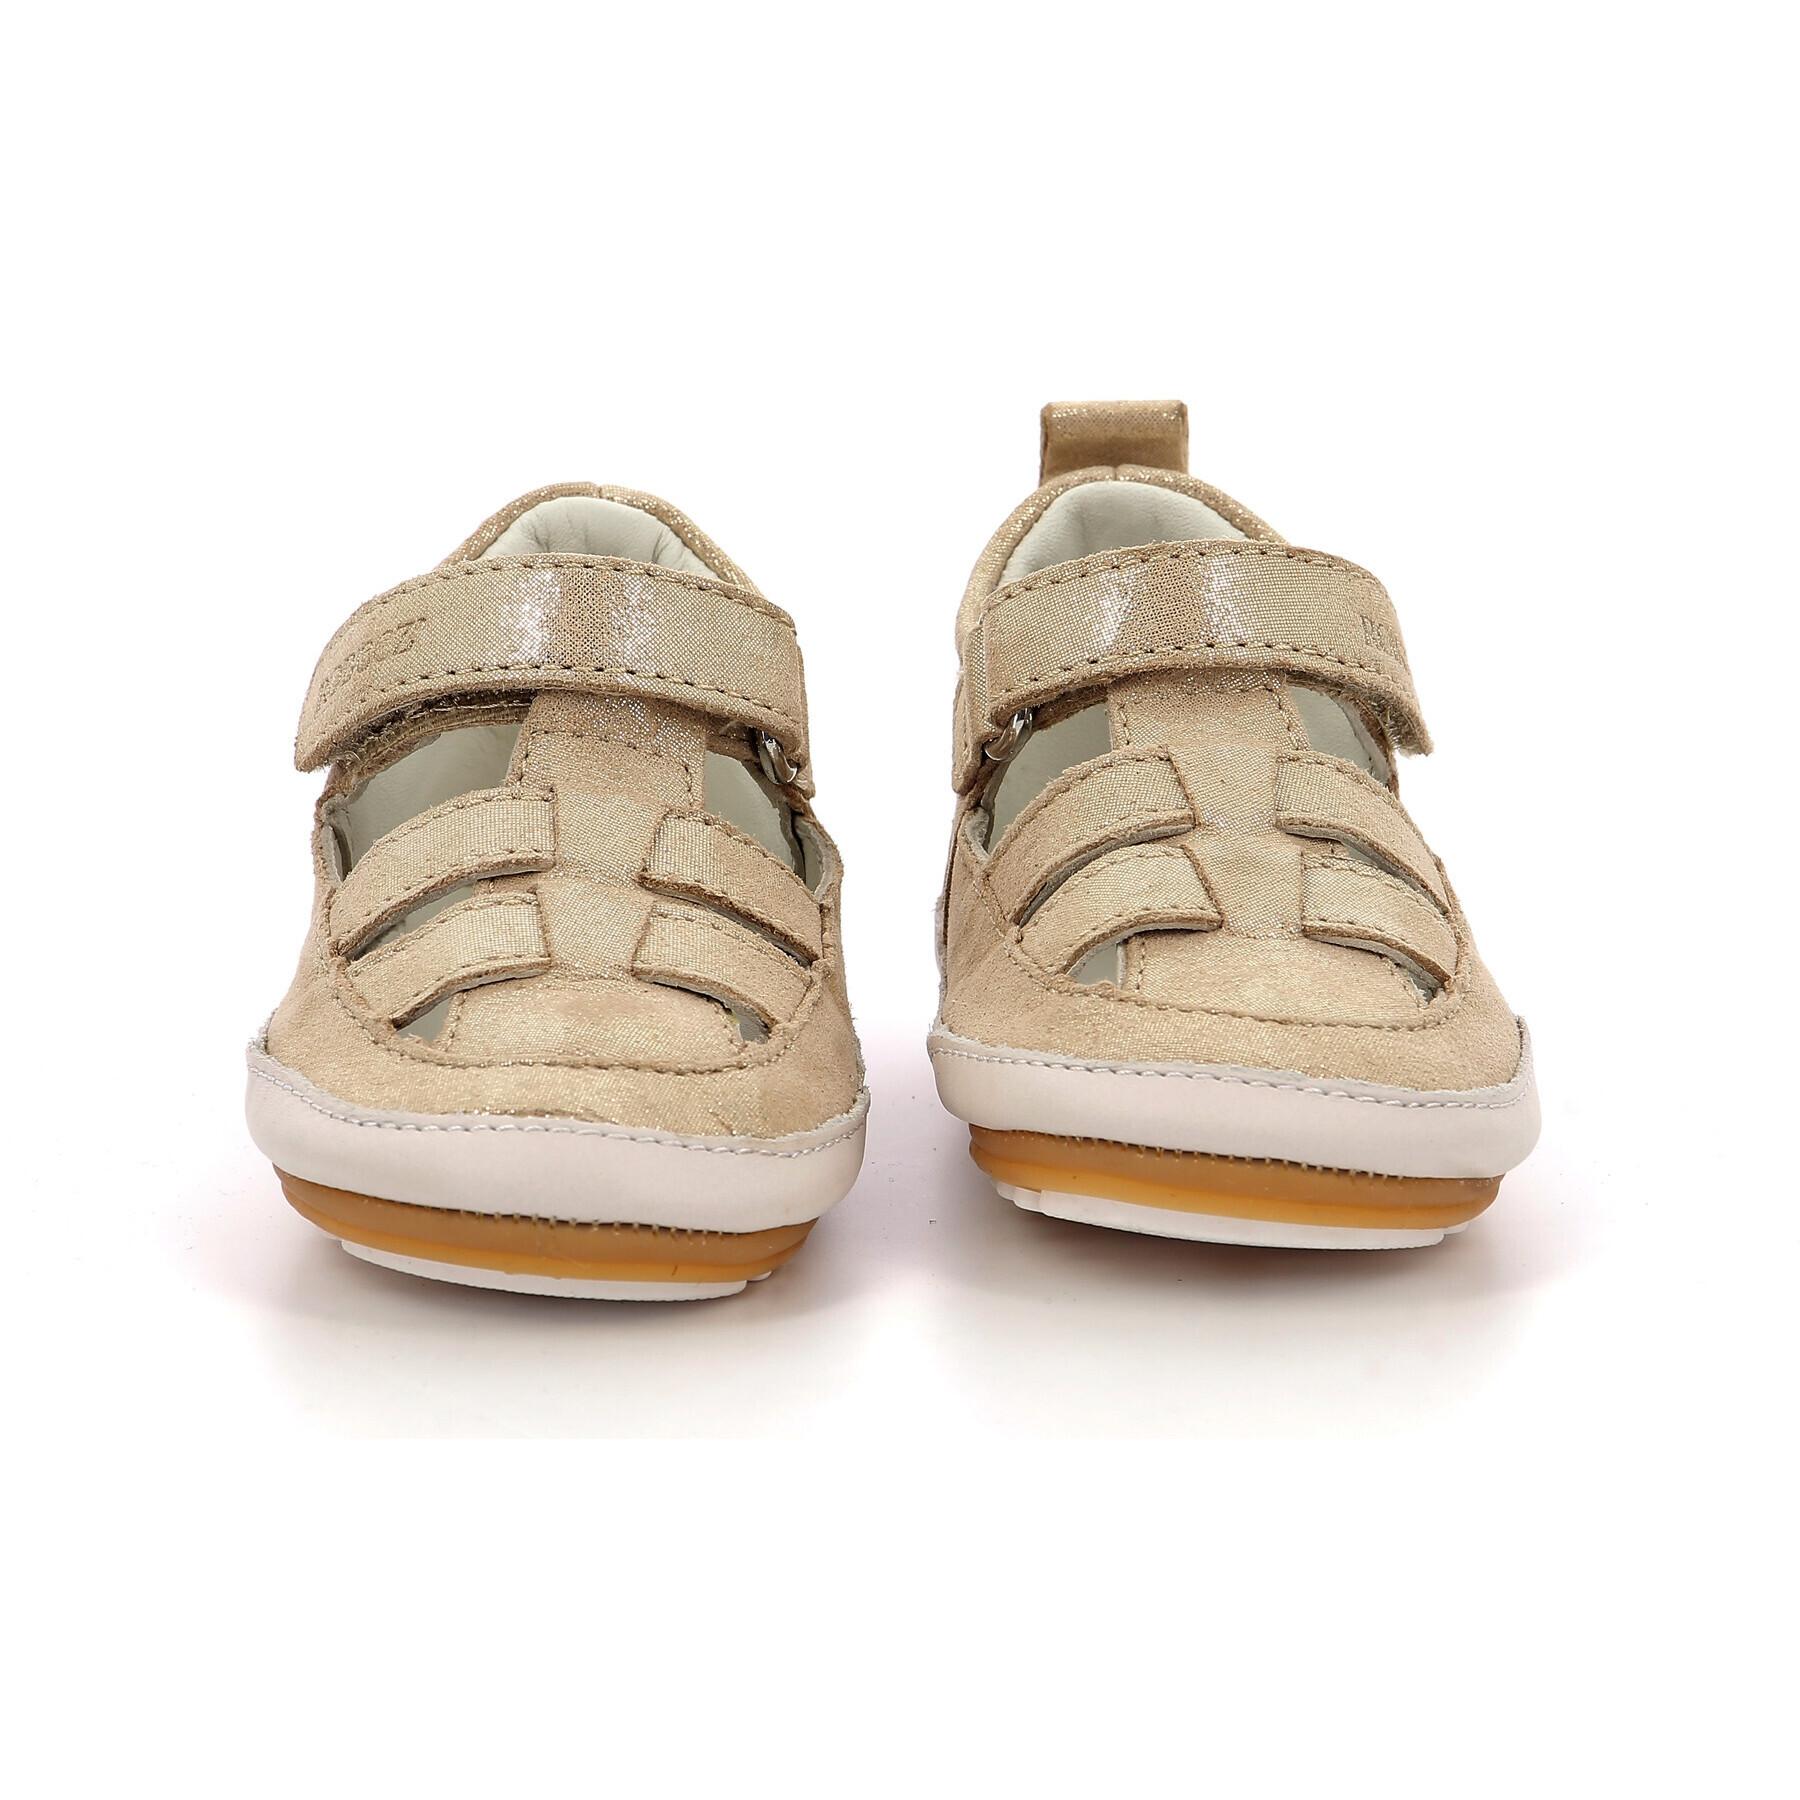 Baby girl sandals Robeez Miniz